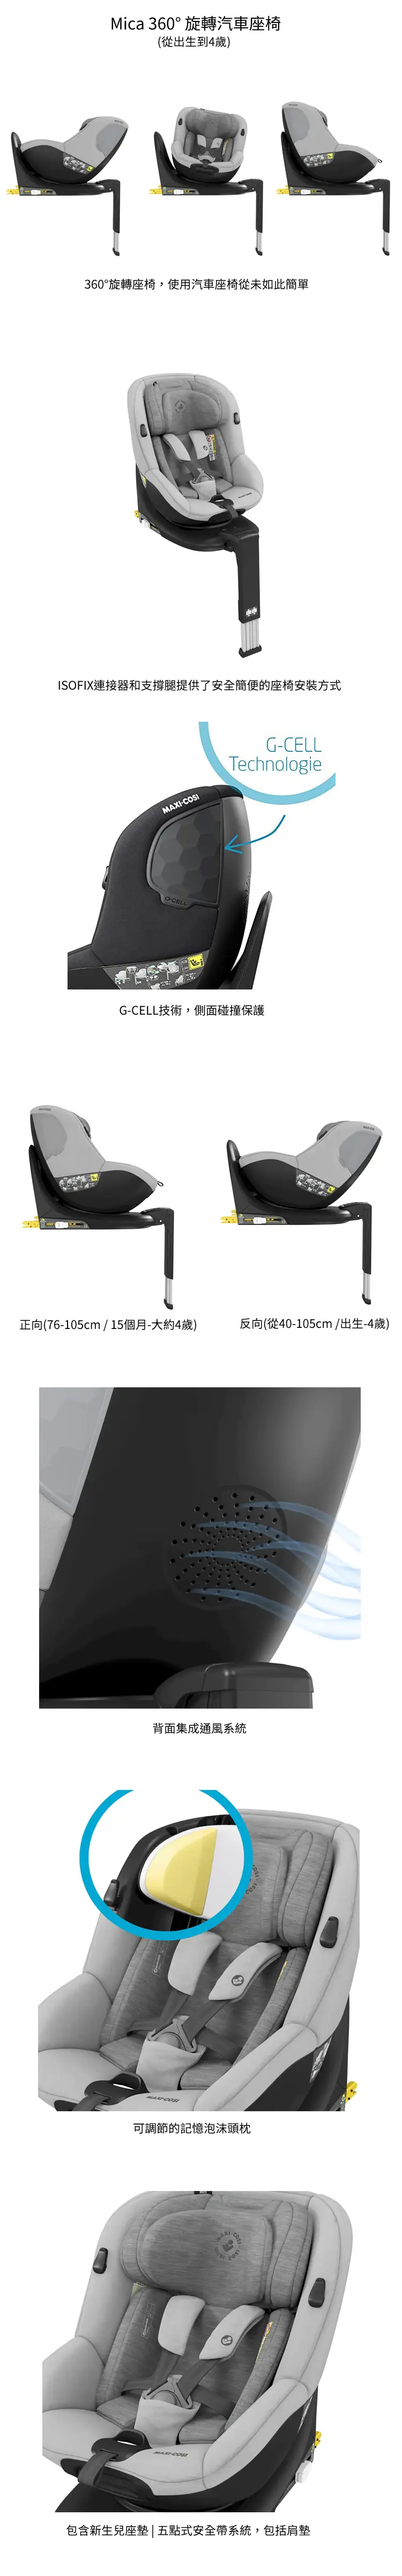 Maxi Cosi Mica 360°可旋转汽车座椅